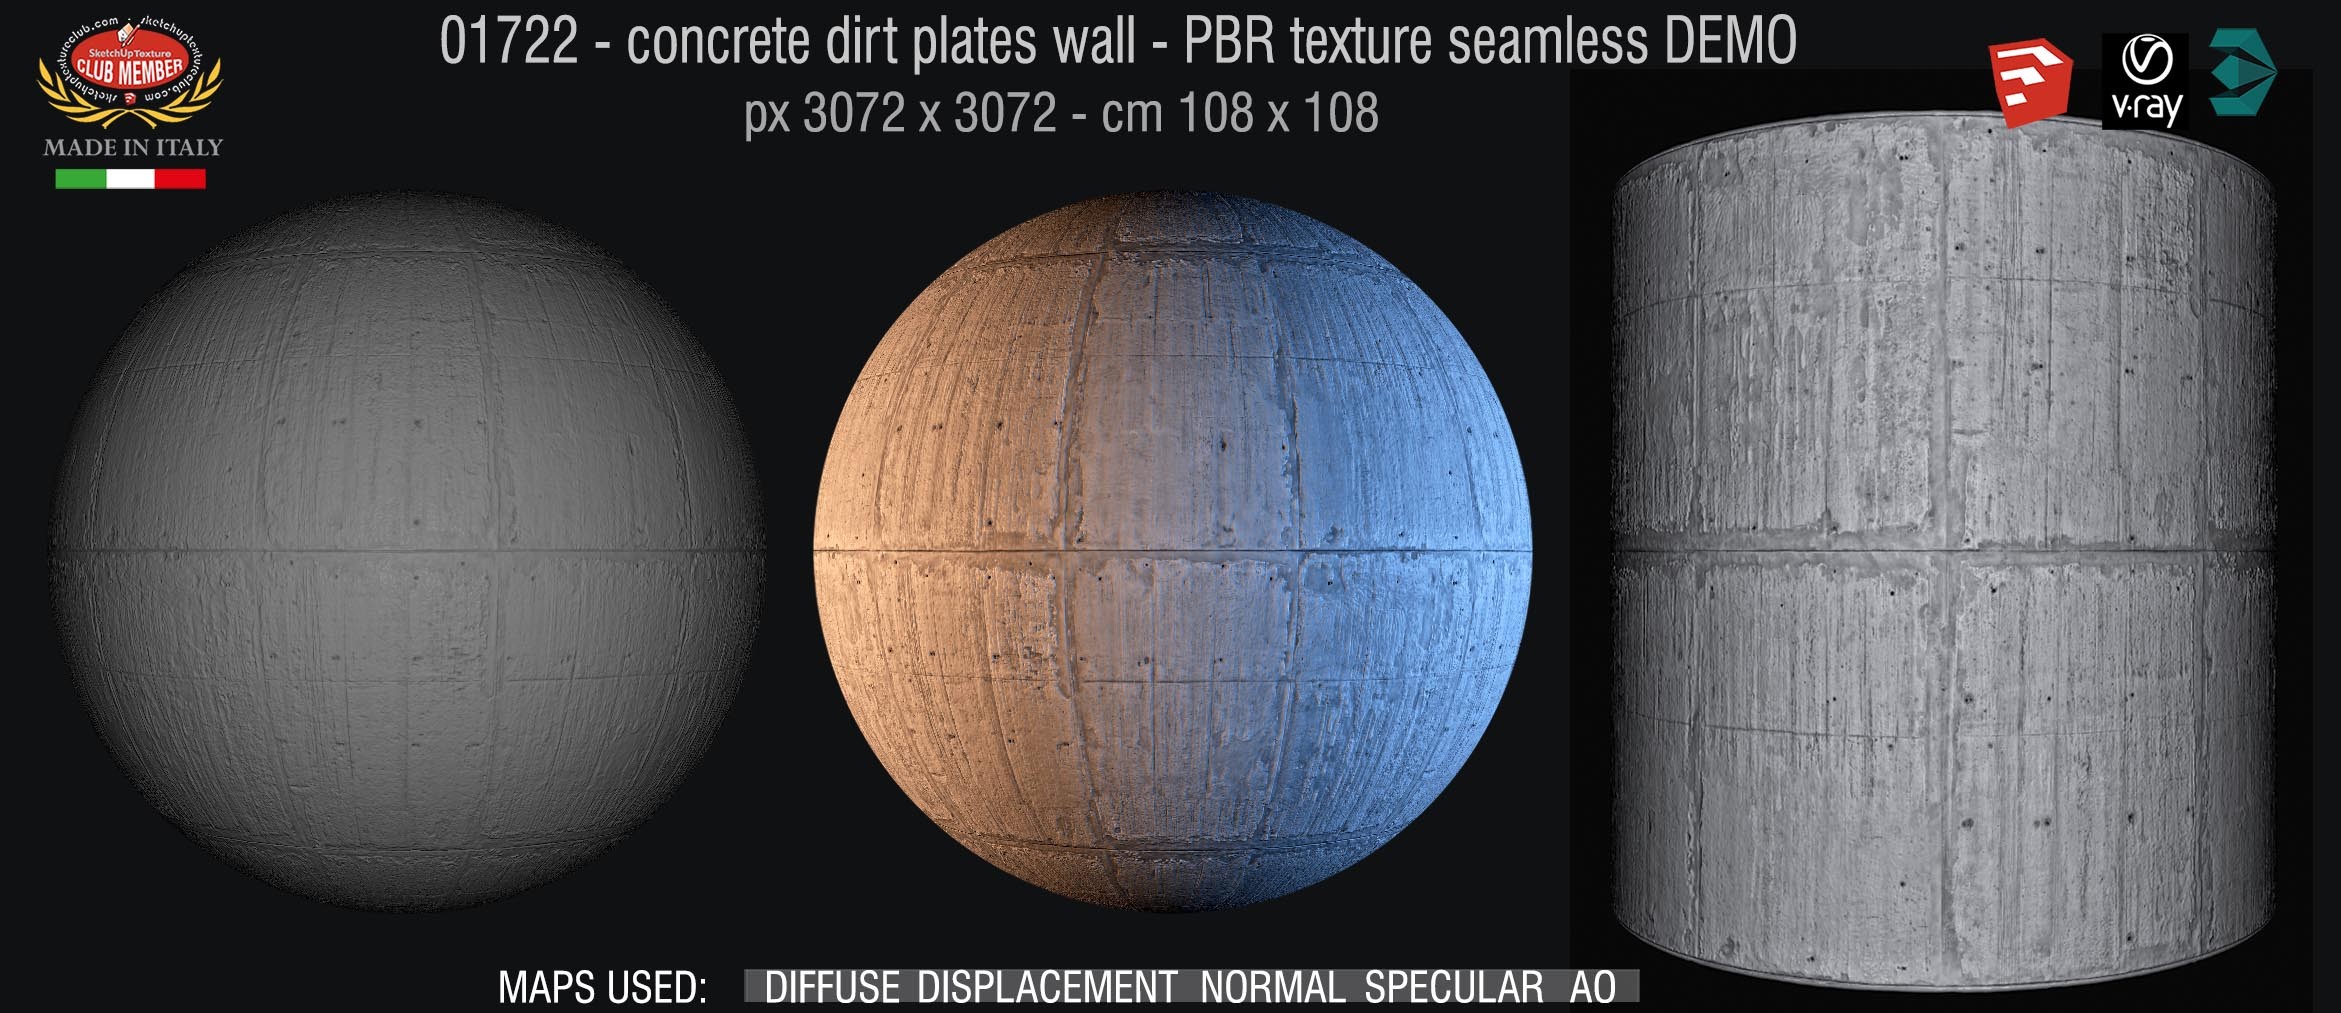 01722 concrete dirt plates wall PBR texture seamless DEMO